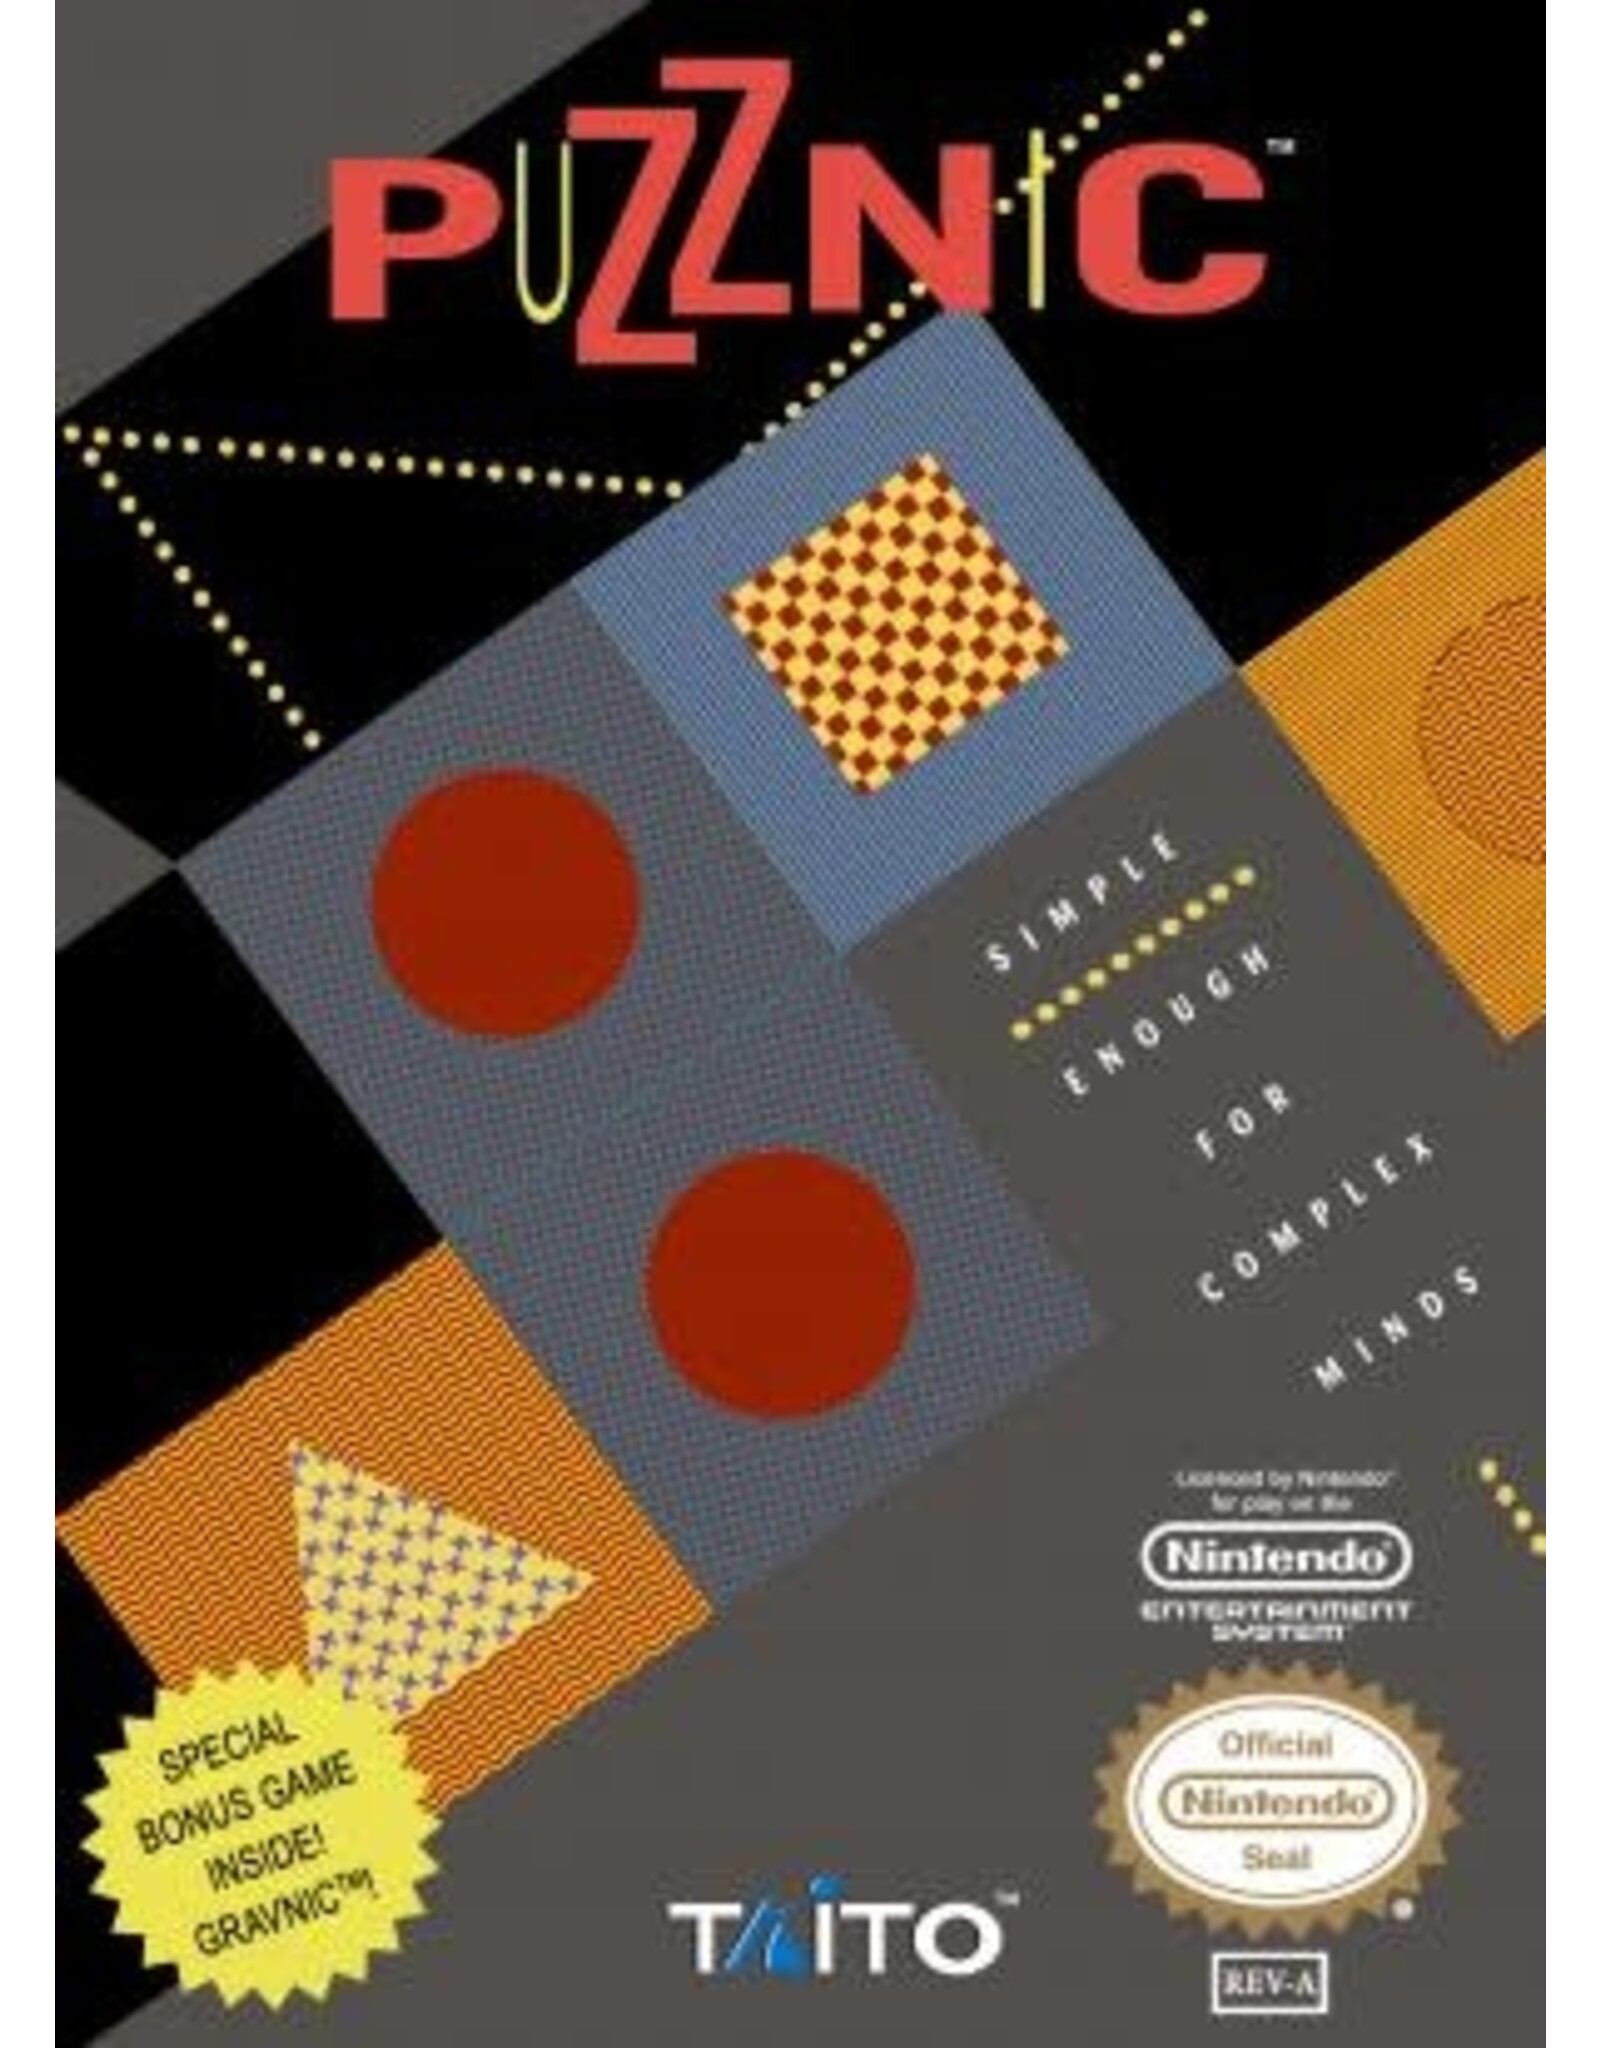 NES Puzznic (Cart Only)